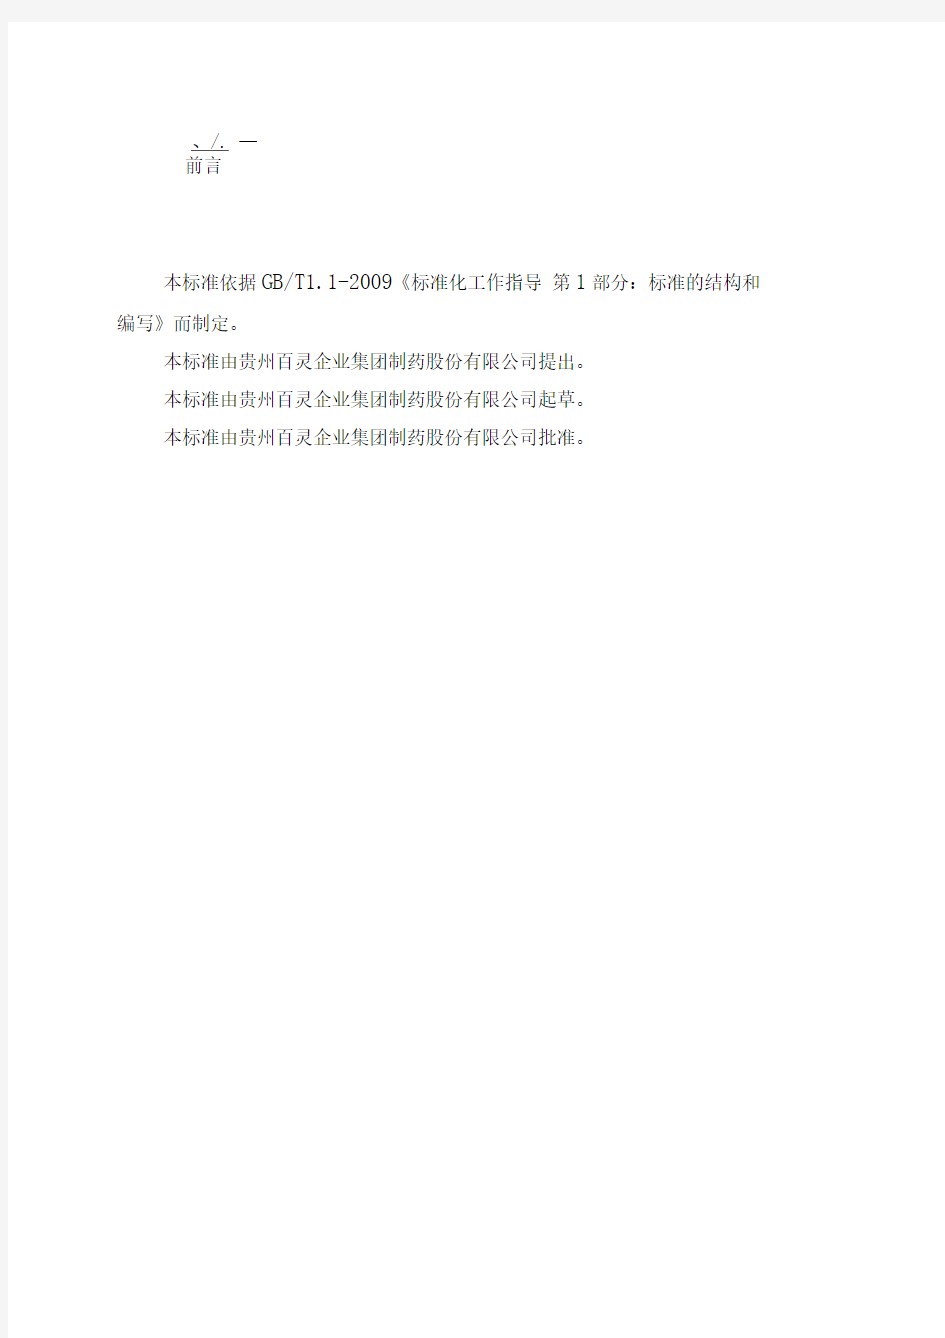 QGZBL0014S-2012贵州百灵企业集团制药股份有限公司爱透牌胶原蛋白粉